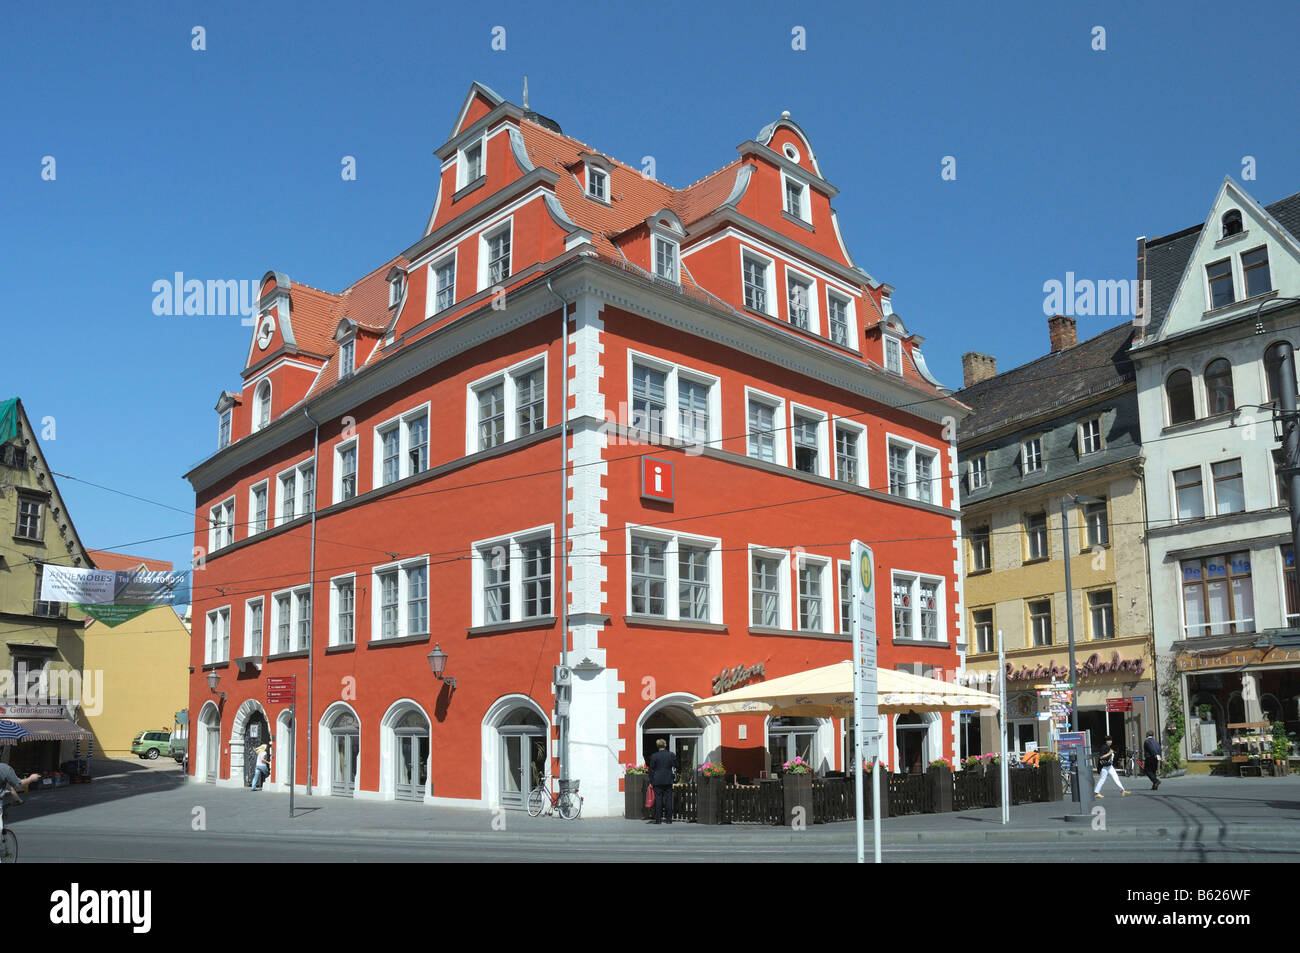 Building containing tourist information about Halle, Marktplatz Sqaure, Halle/Saale, Saxony-Anhalt, Germany, Europe Stock Photo